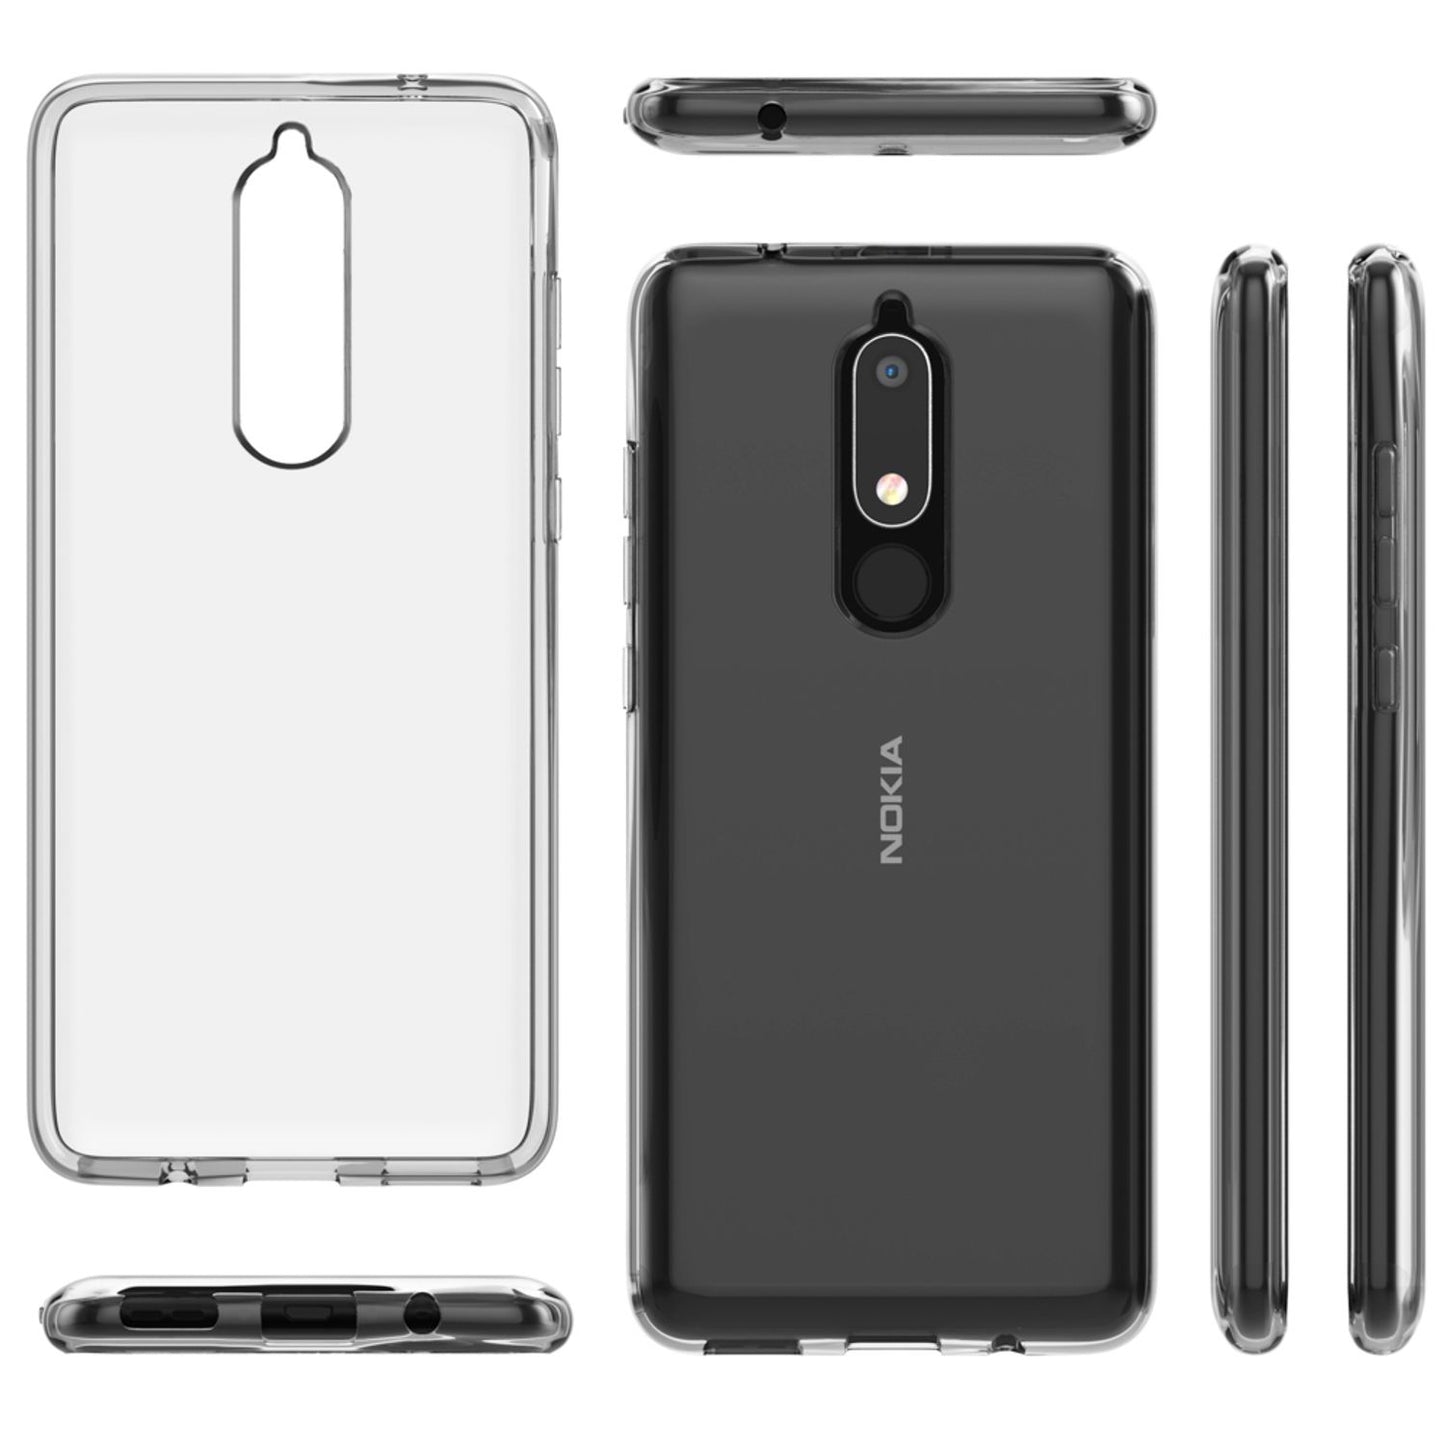 Nokia 5.1 (2018) Handy Hülle von NALIA, Soft TPU Silikon Case Cover Bumper Etui